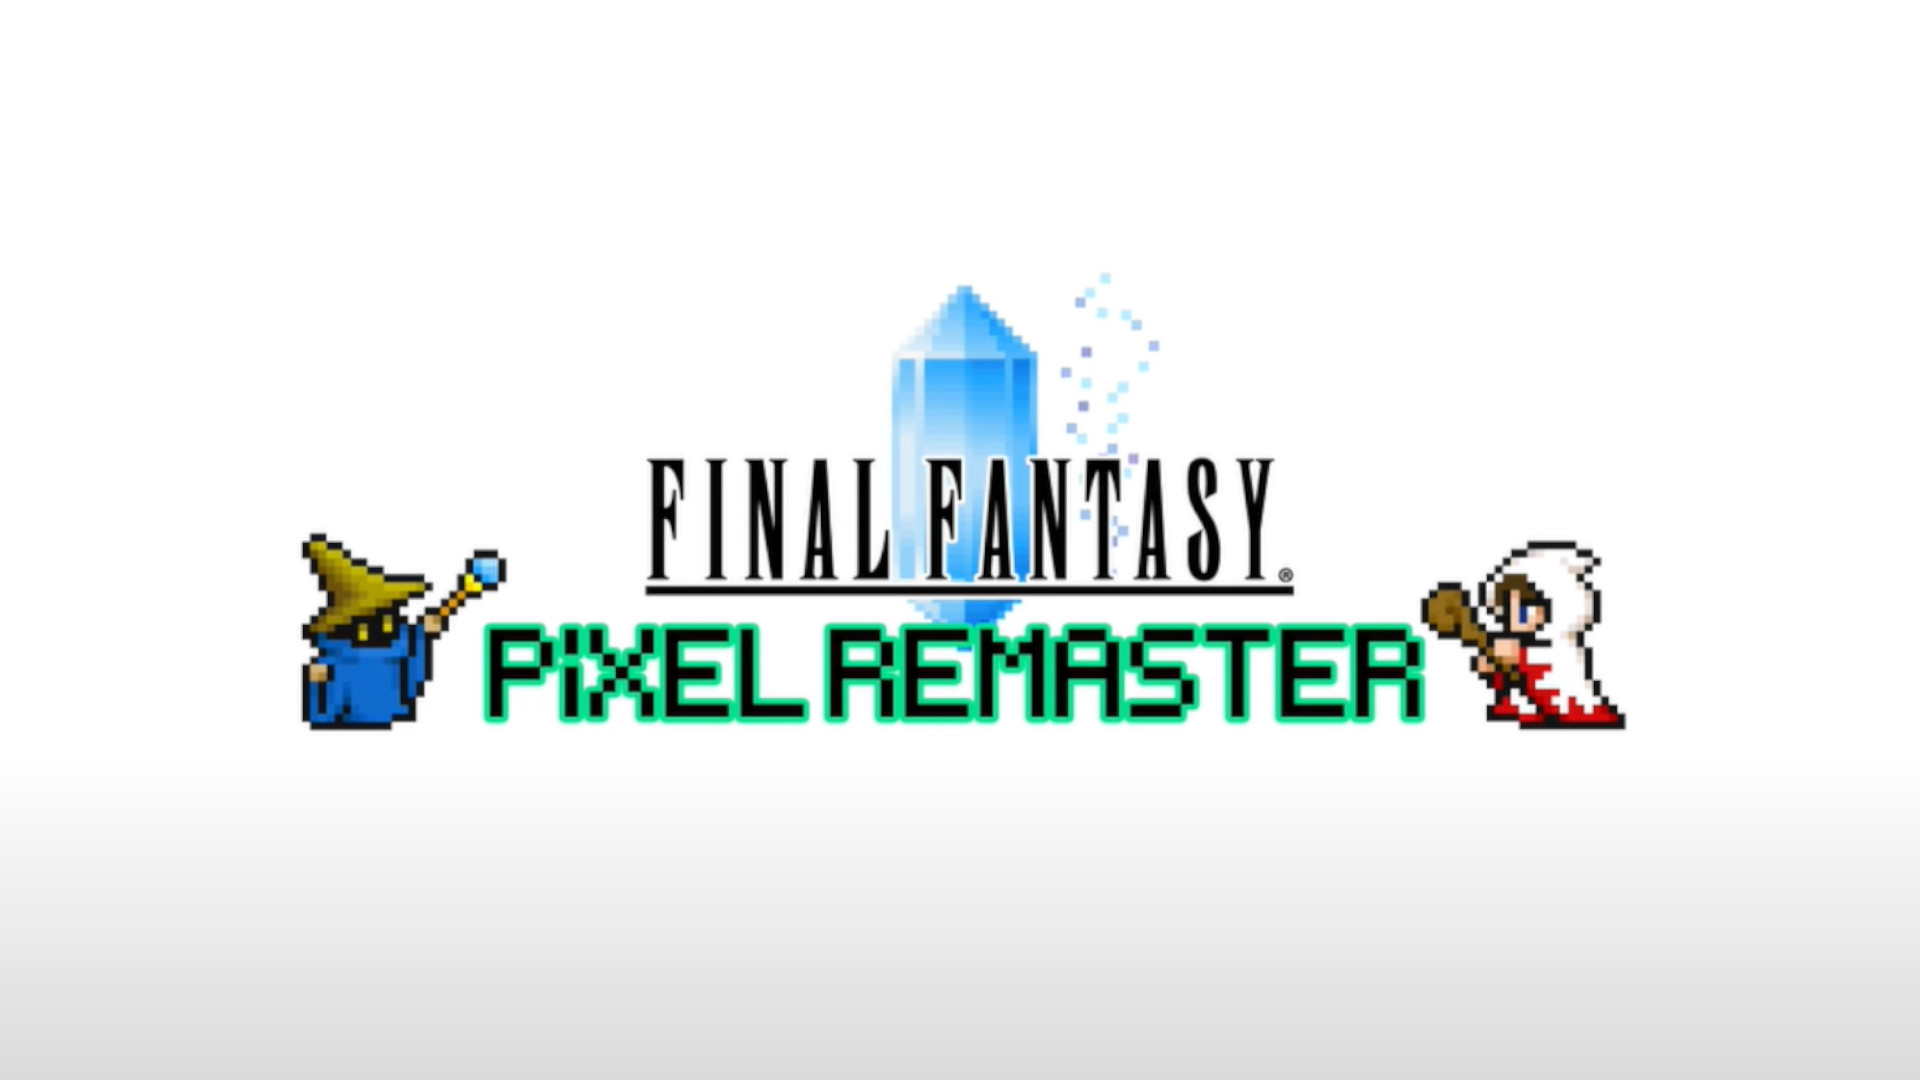 Final Fantasy Pixel Remaster games start releasing next month